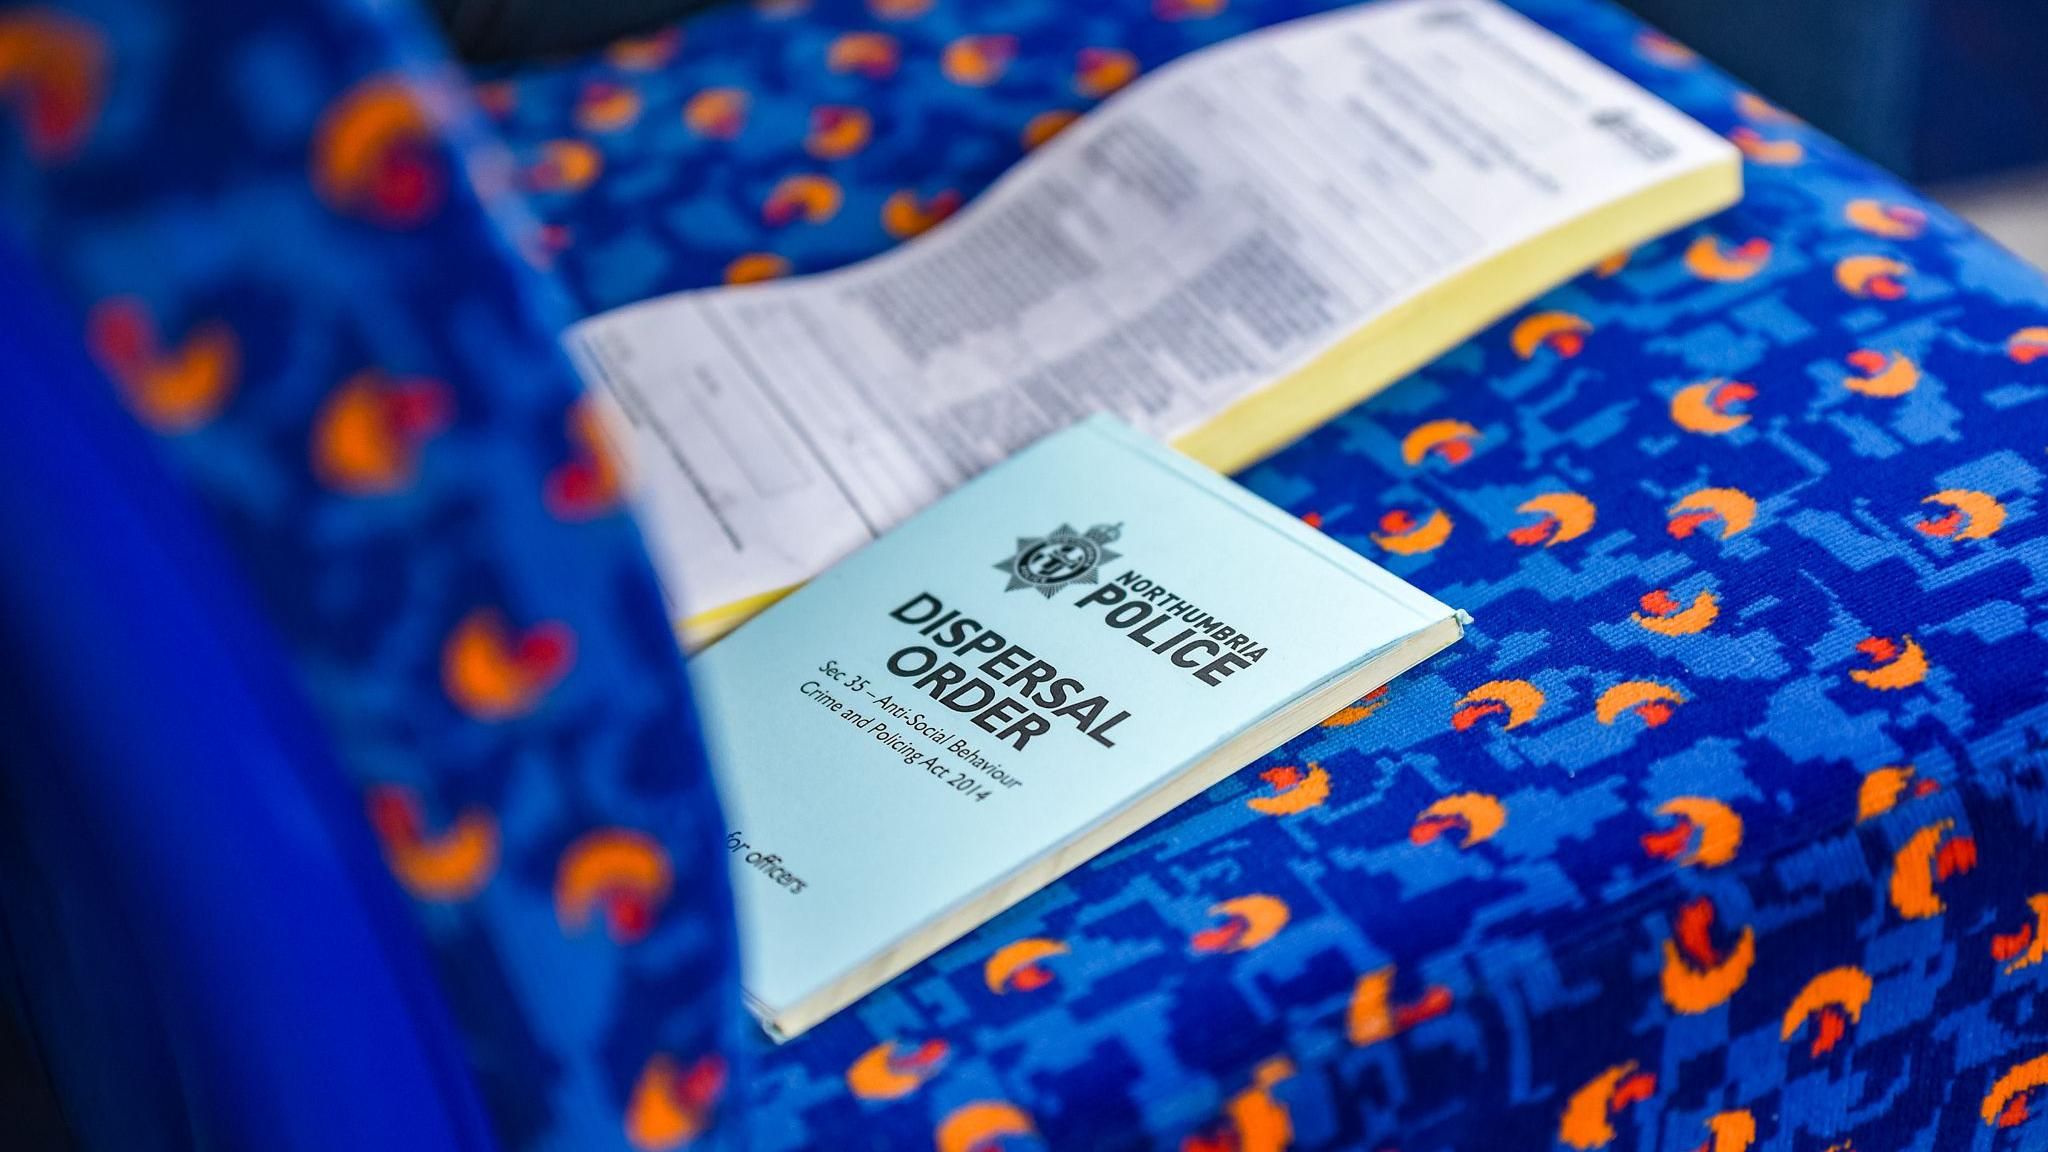 Dispersal order pad on bus seat